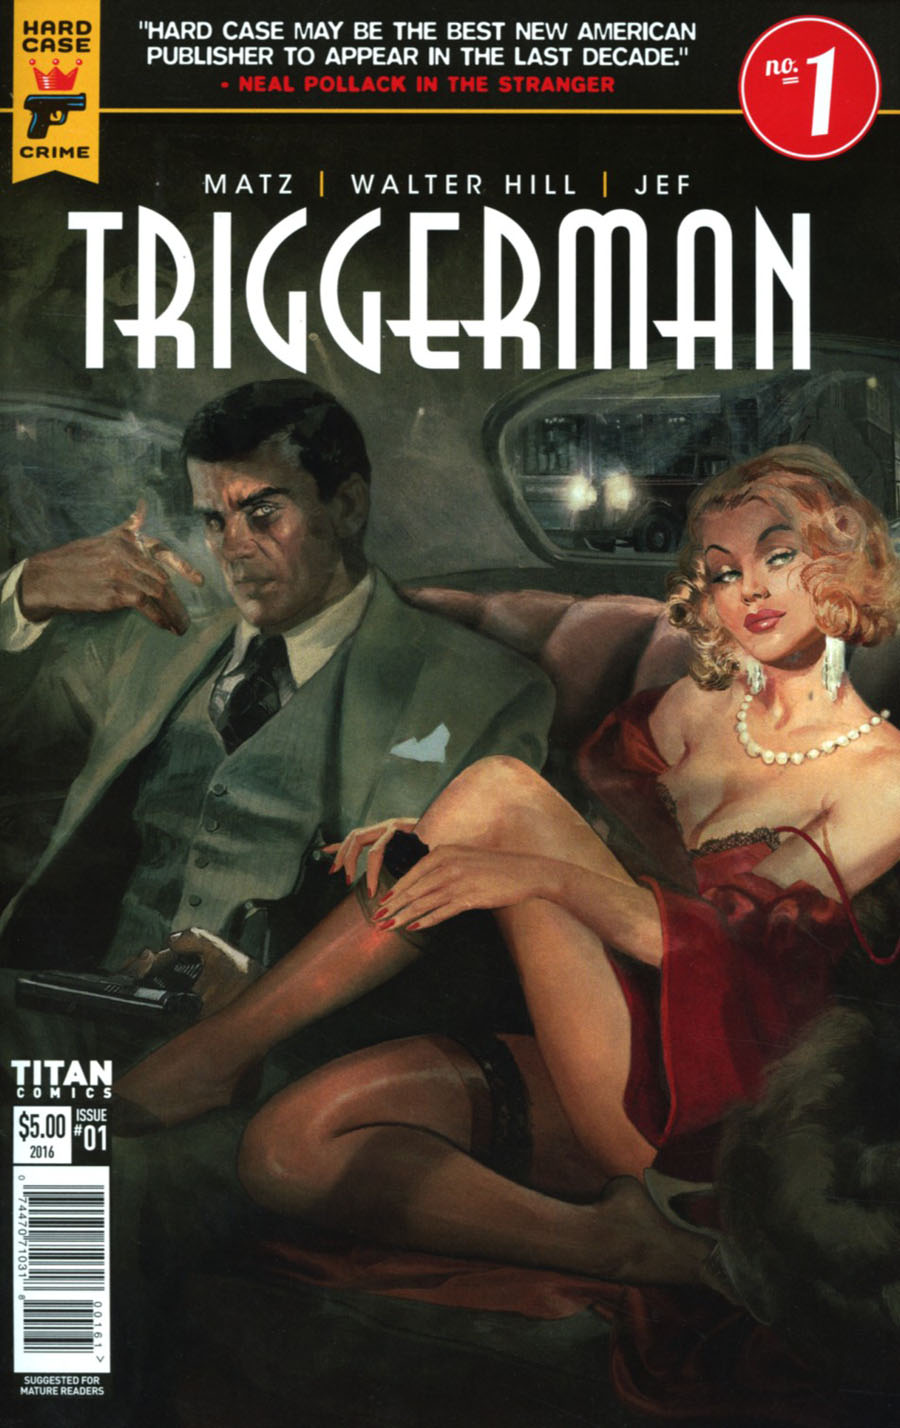 Hard Case Crime Triggerman #1 Cover F NYCC Exclusive Fay Dalton Variant Cover